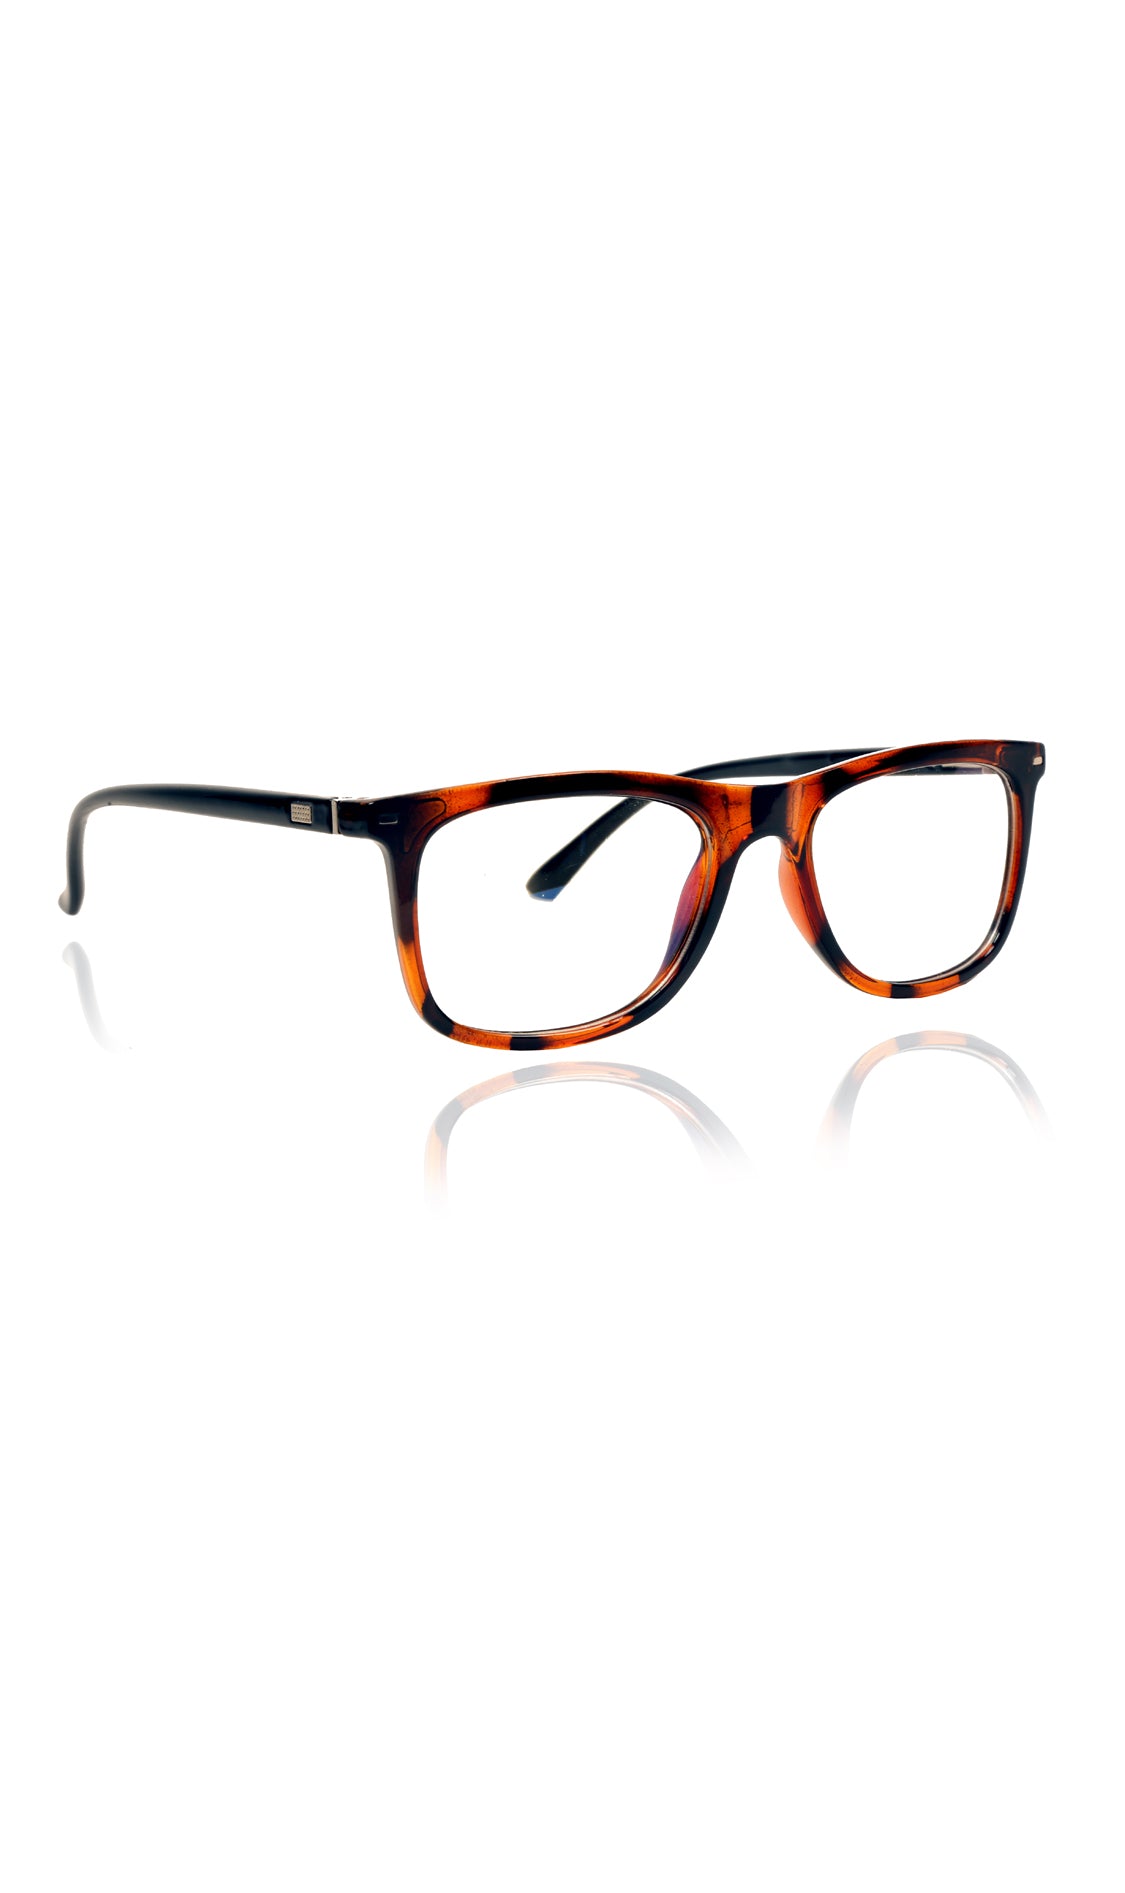 Jodykoes® Colour Frame Series Eyewears | Blue Rays Protection Warfare Stylish Spectacles With Anti Glare Eyeglasses For Men and Women Eyewears (Leopard Print) - Jodykoes ®